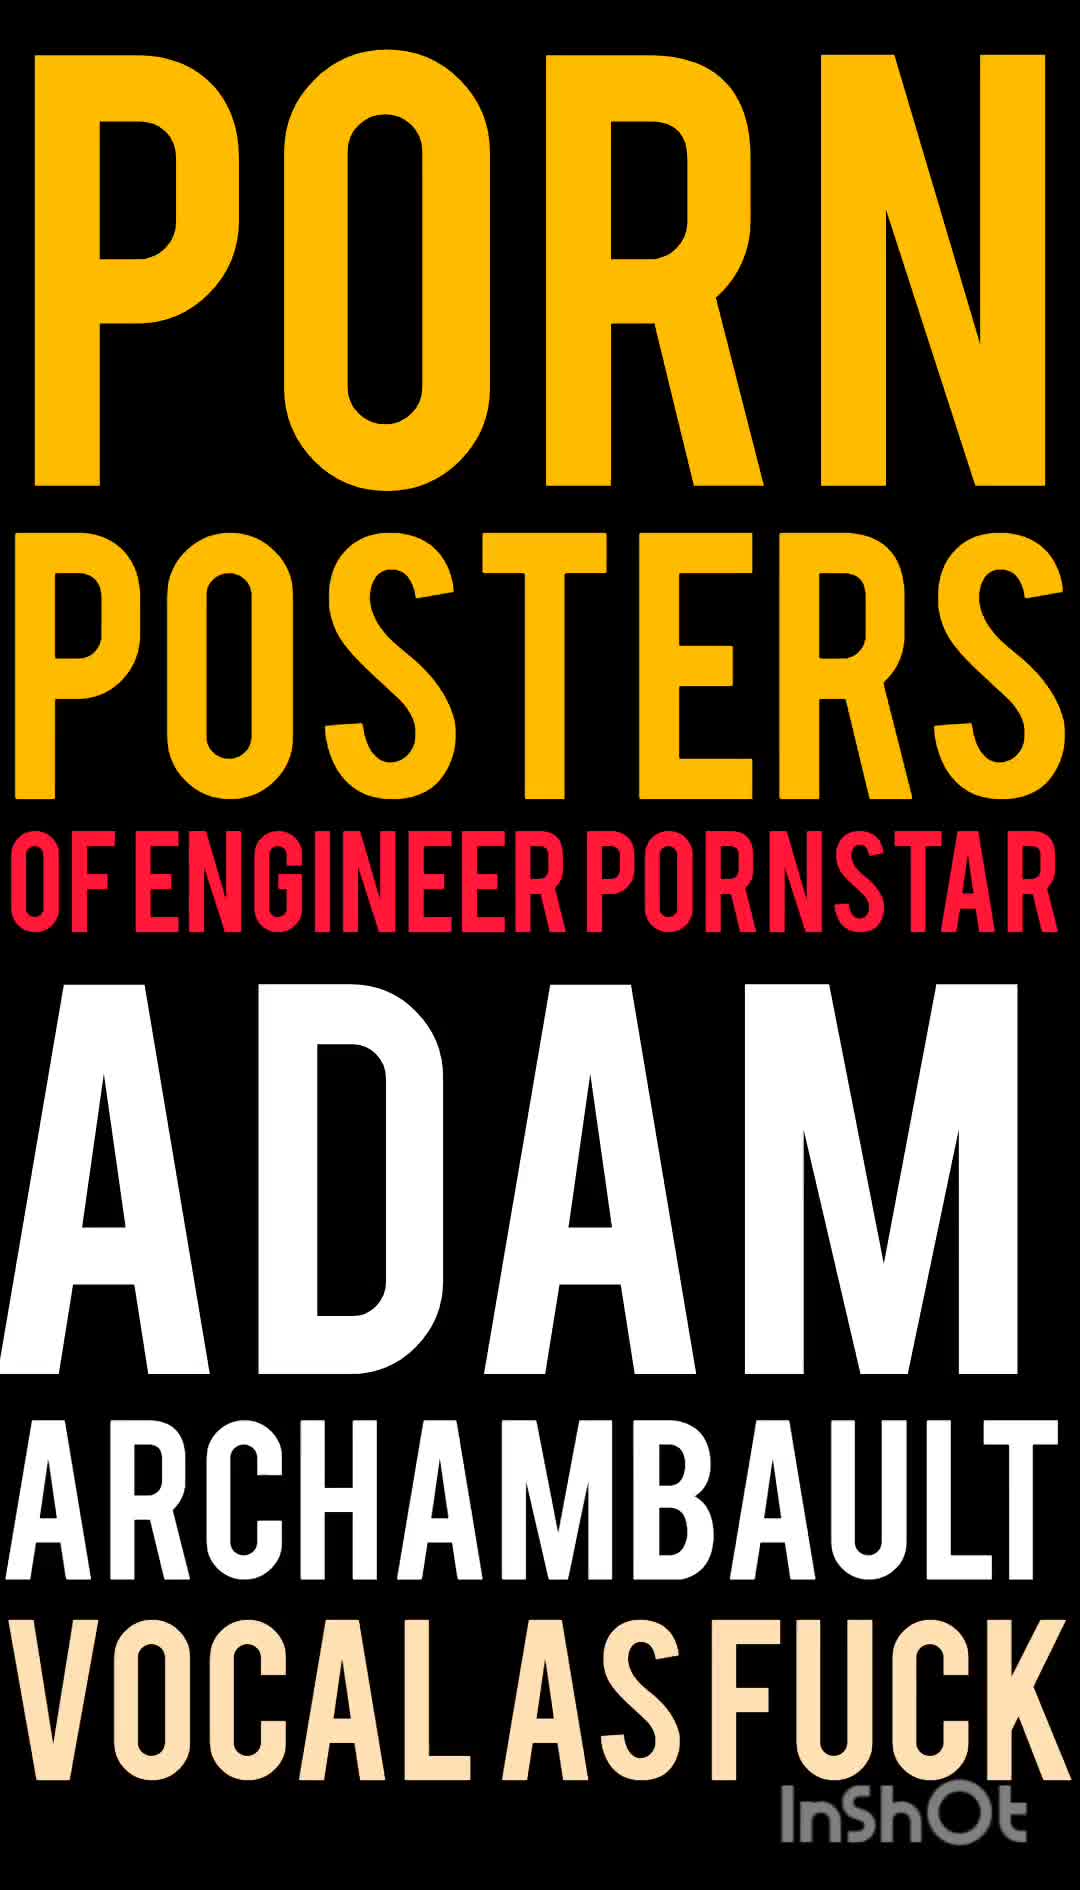 Porn posters of engineer pornstar Adam Archambault (vocal as fuck)